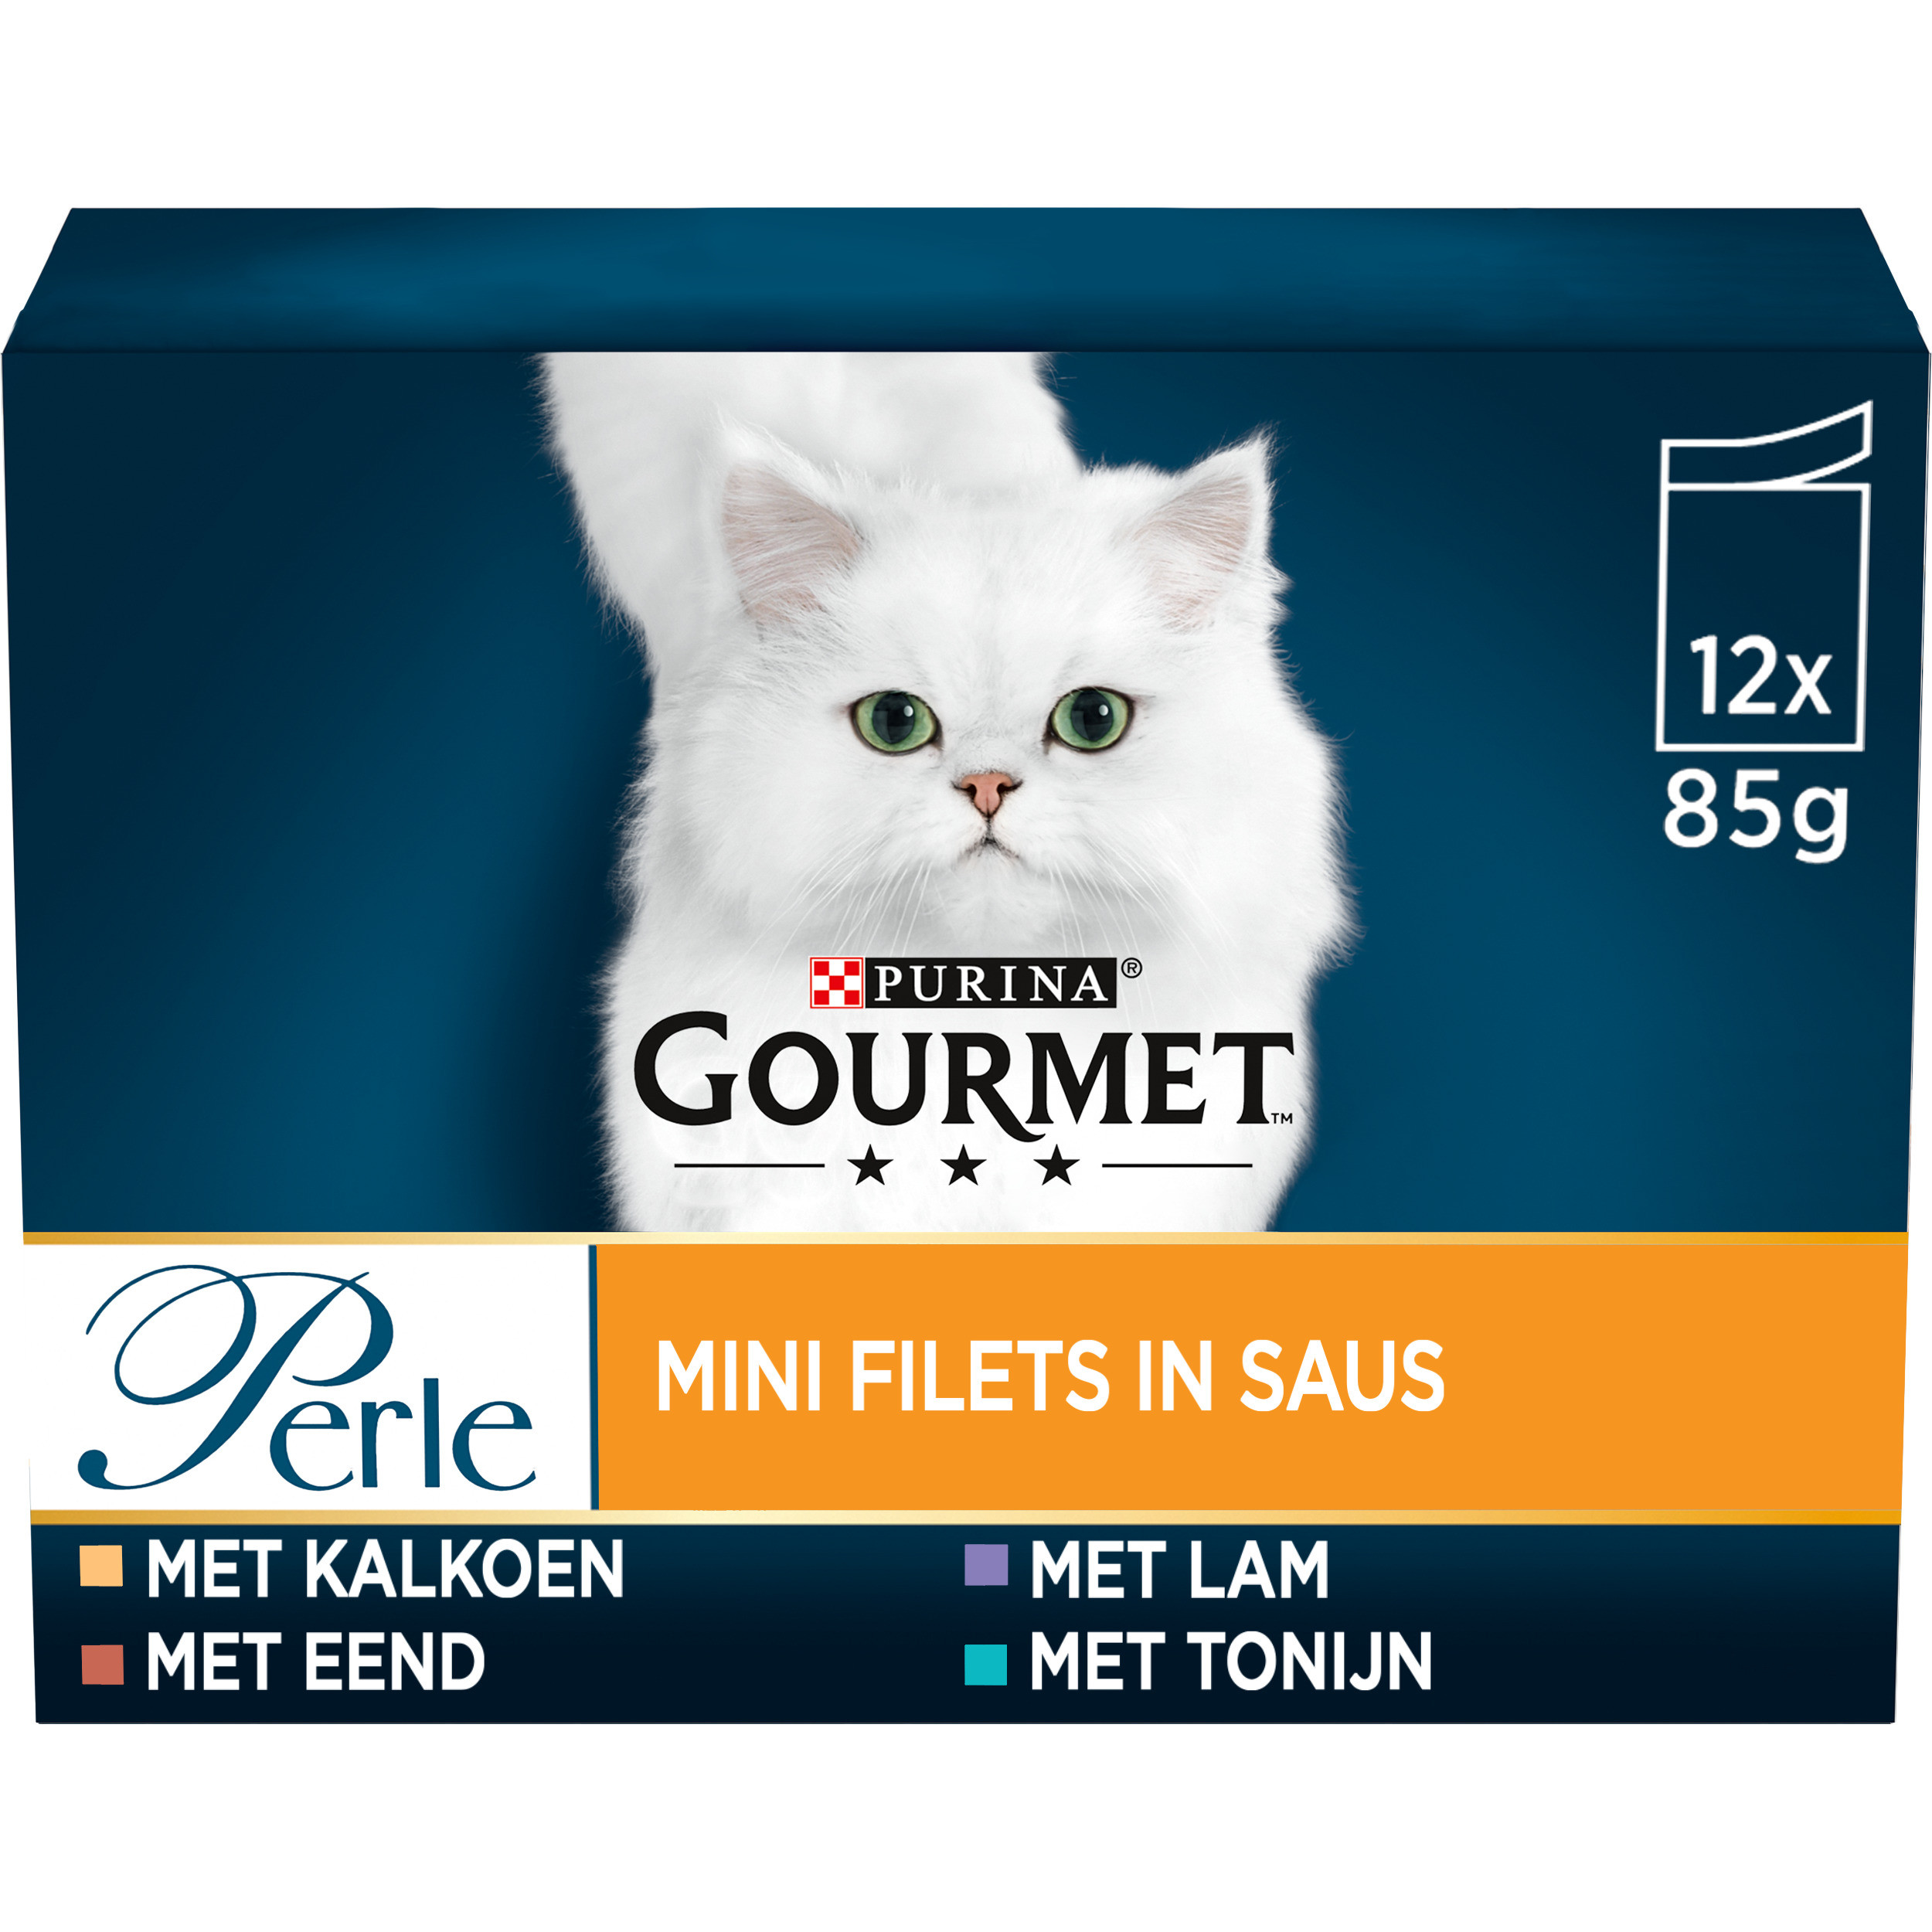 Gourmet Perle Mini Filet in saus - kalkoen/eend/tonijn/lam nat kattenvoer 85 gr zakjes